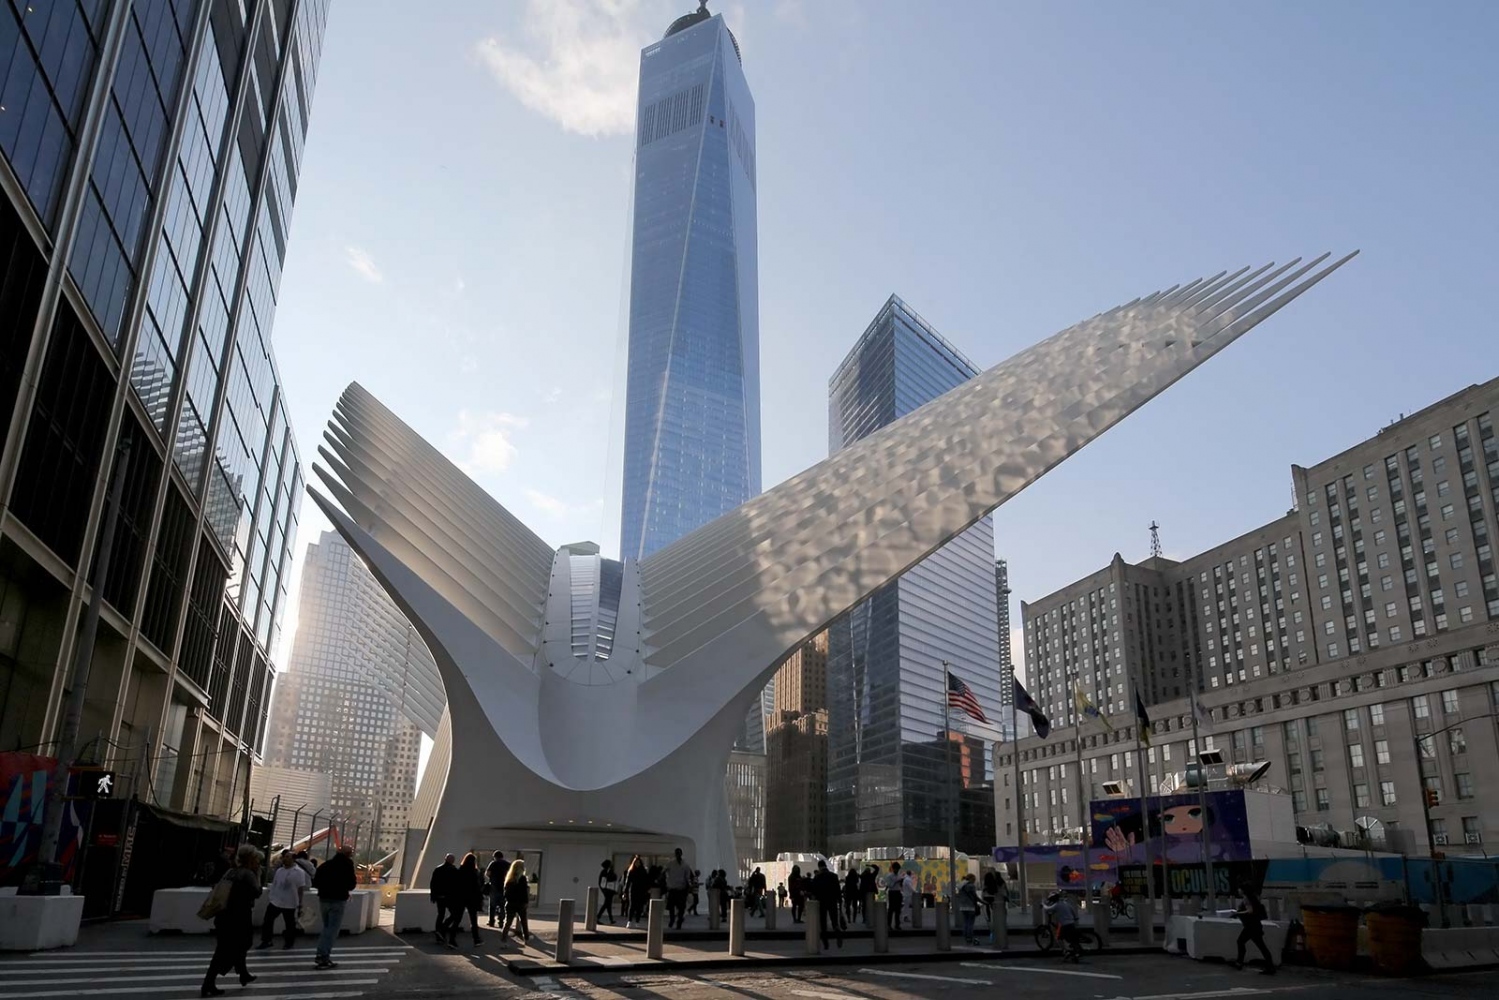 Architecture - Oculus - World Trade Center - New York